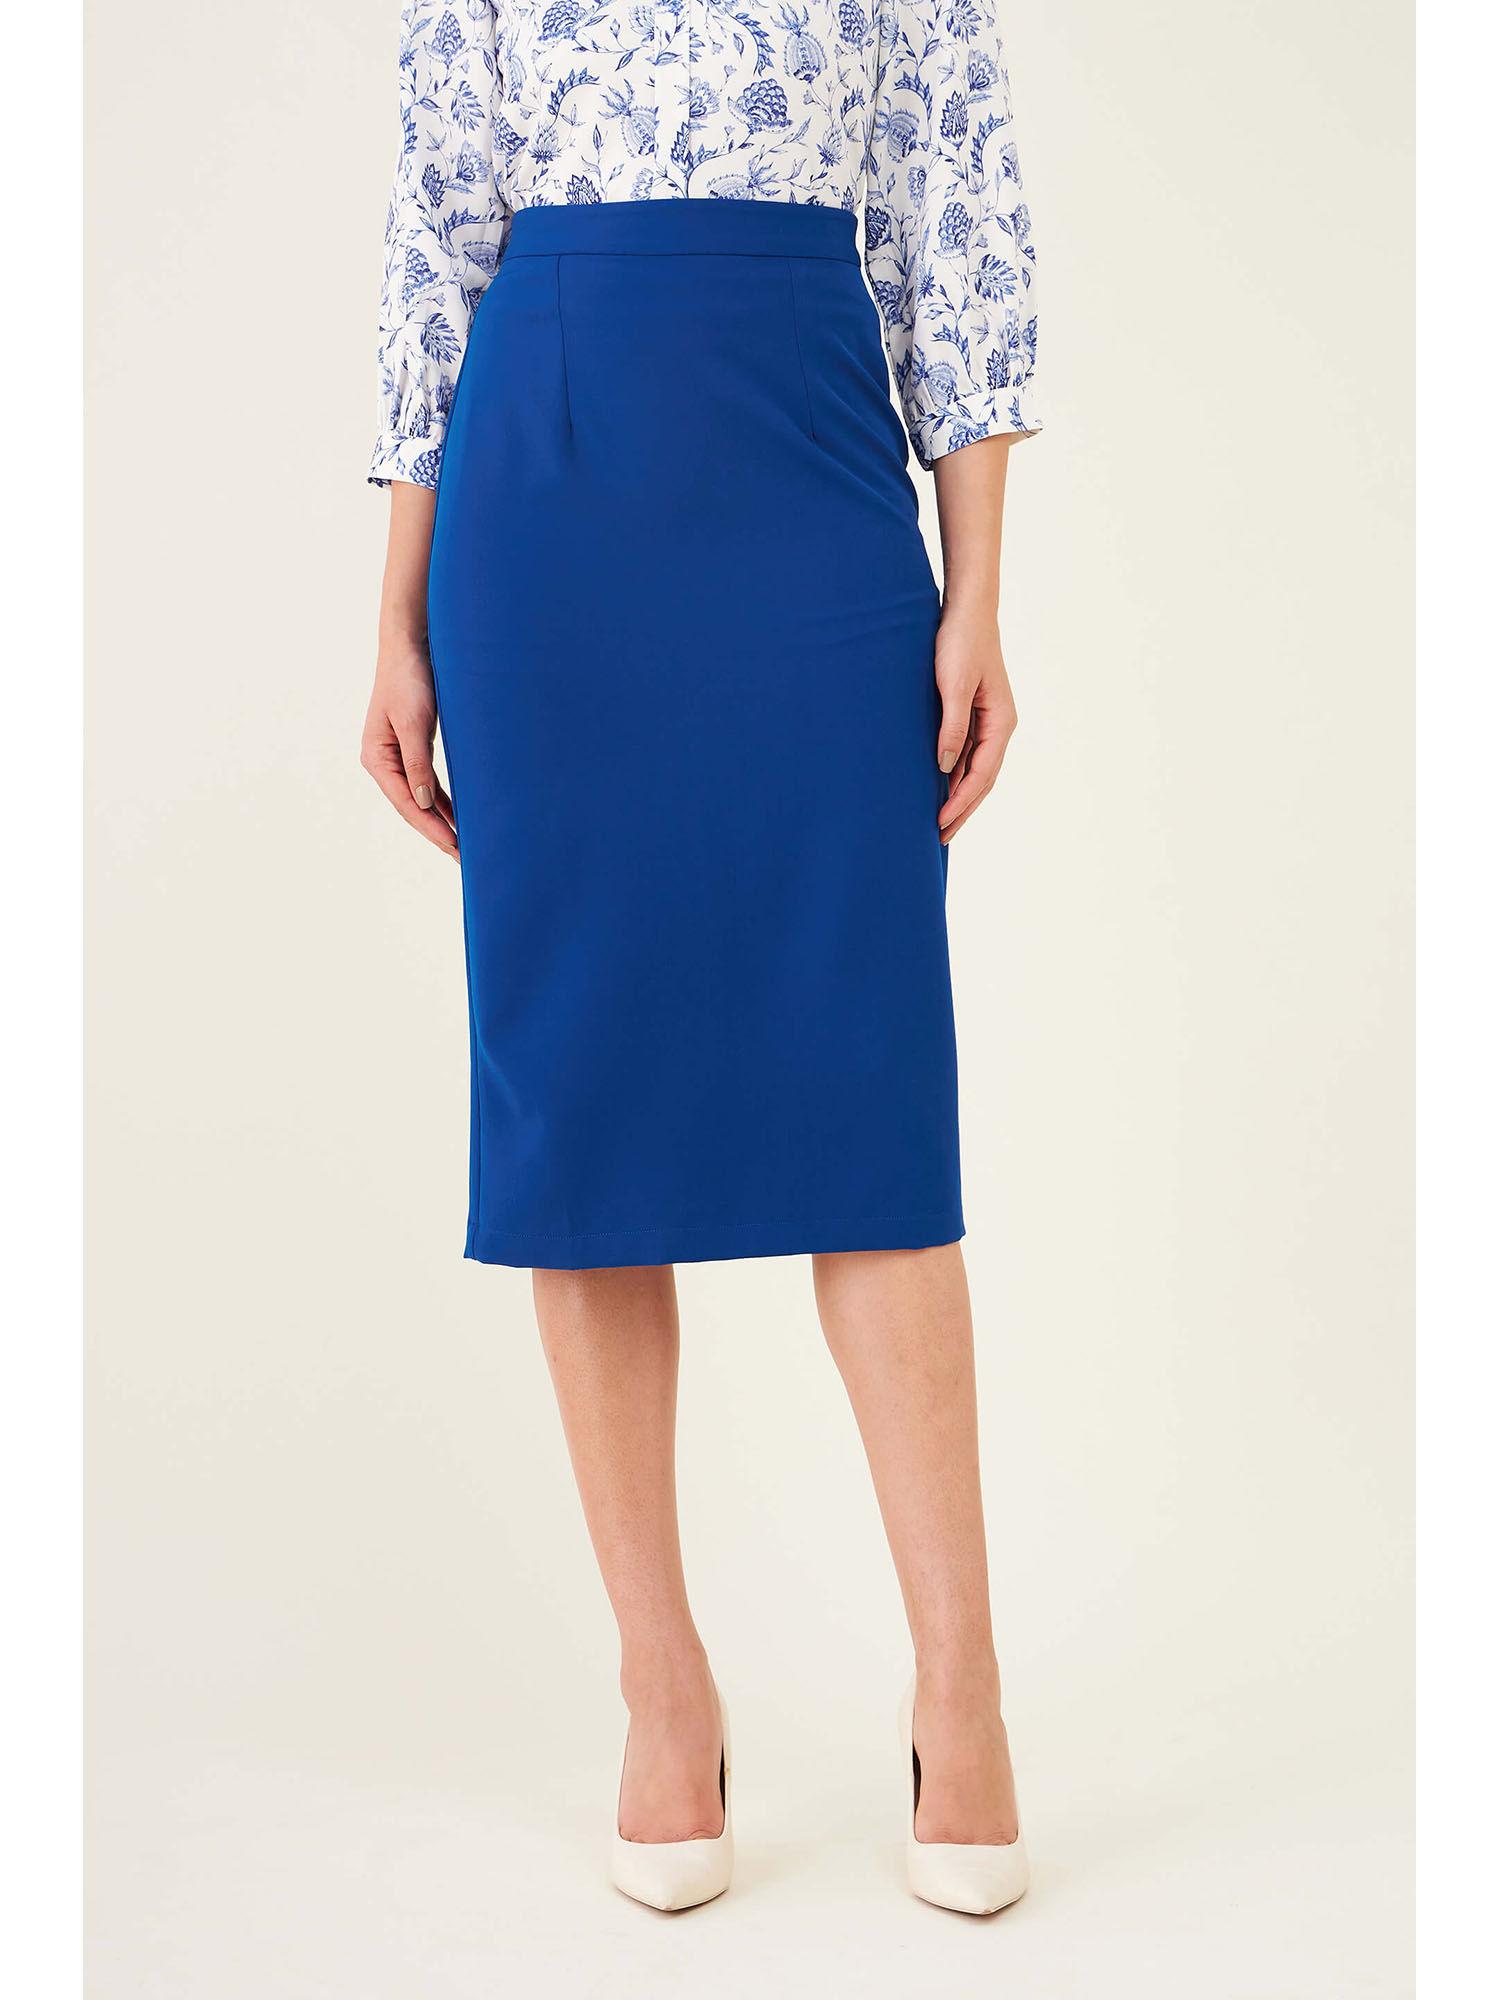 blue longline pencil skirt